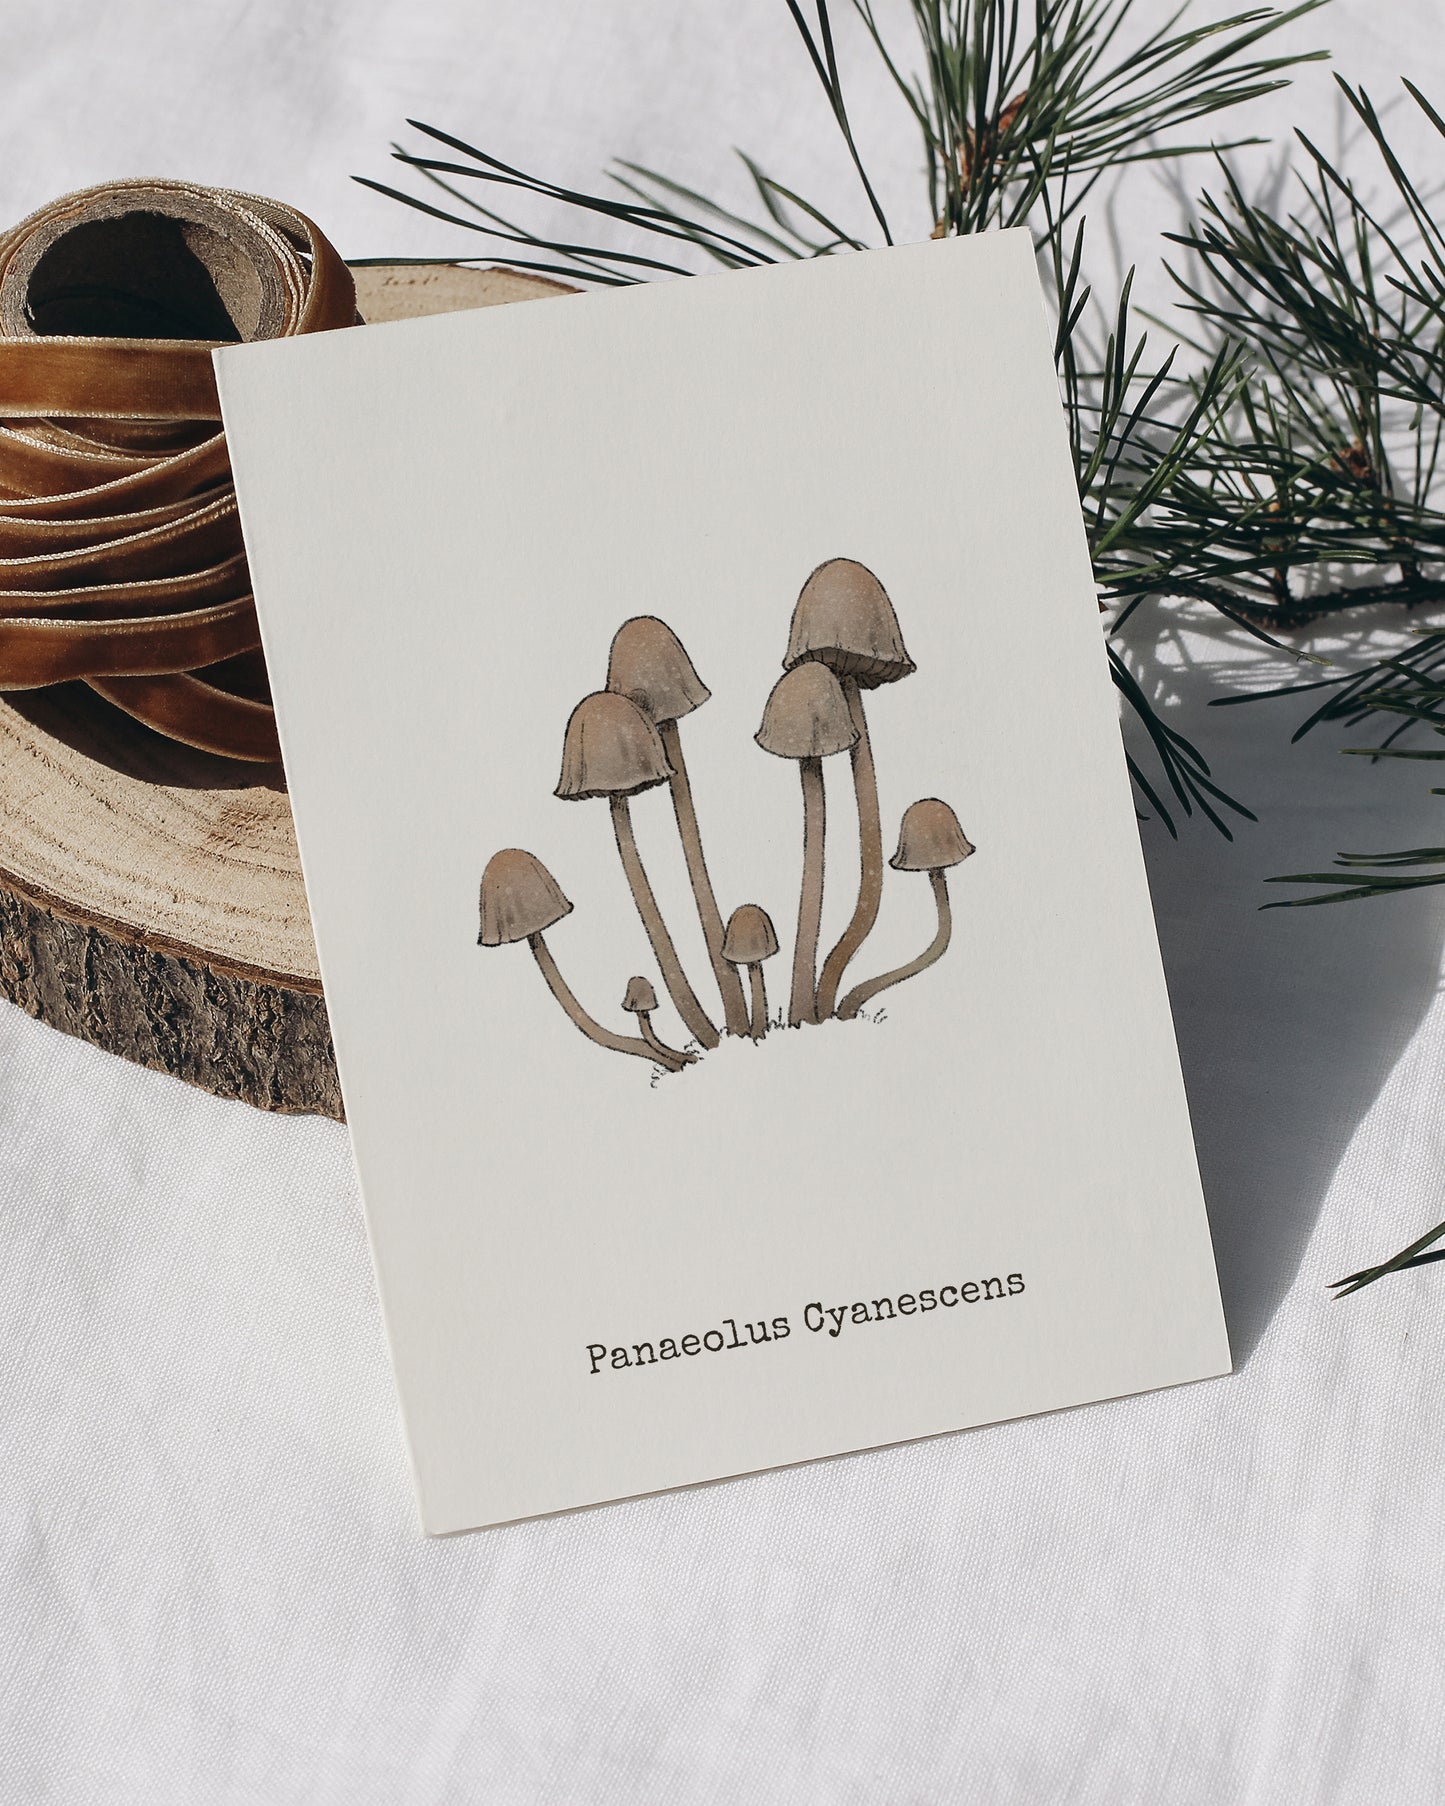 "Panaeolus Cyanescens" by Catherine Hébert - Panaeolus Cyanescens Mushroom Art Print